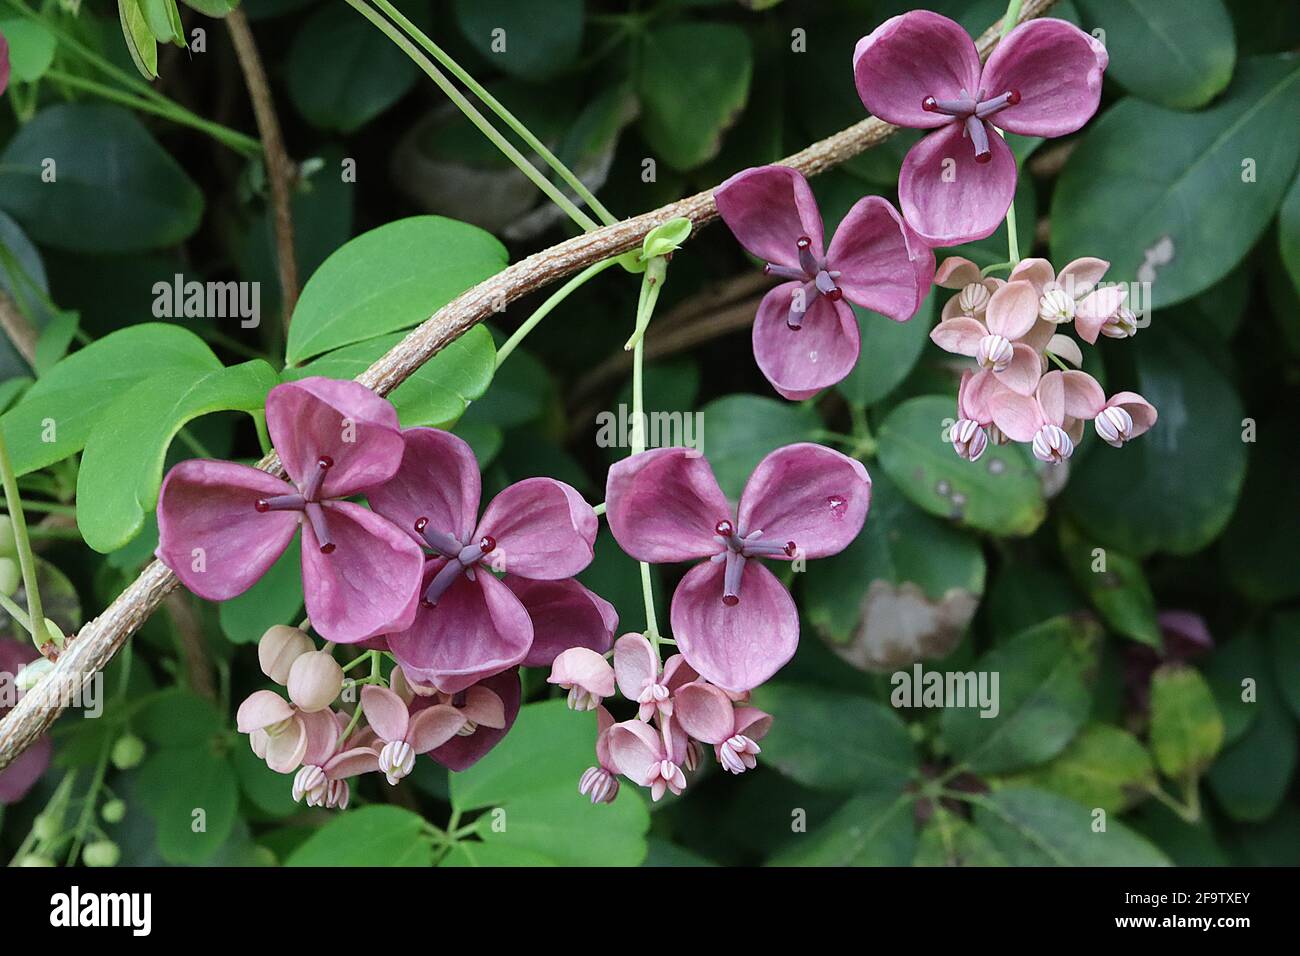 Akebia quinata Schokoladenrebe – duftende, lila, schalenförmige Blüten mit dicken Kelchblättern, April, England, Großbritannien Stockfoto